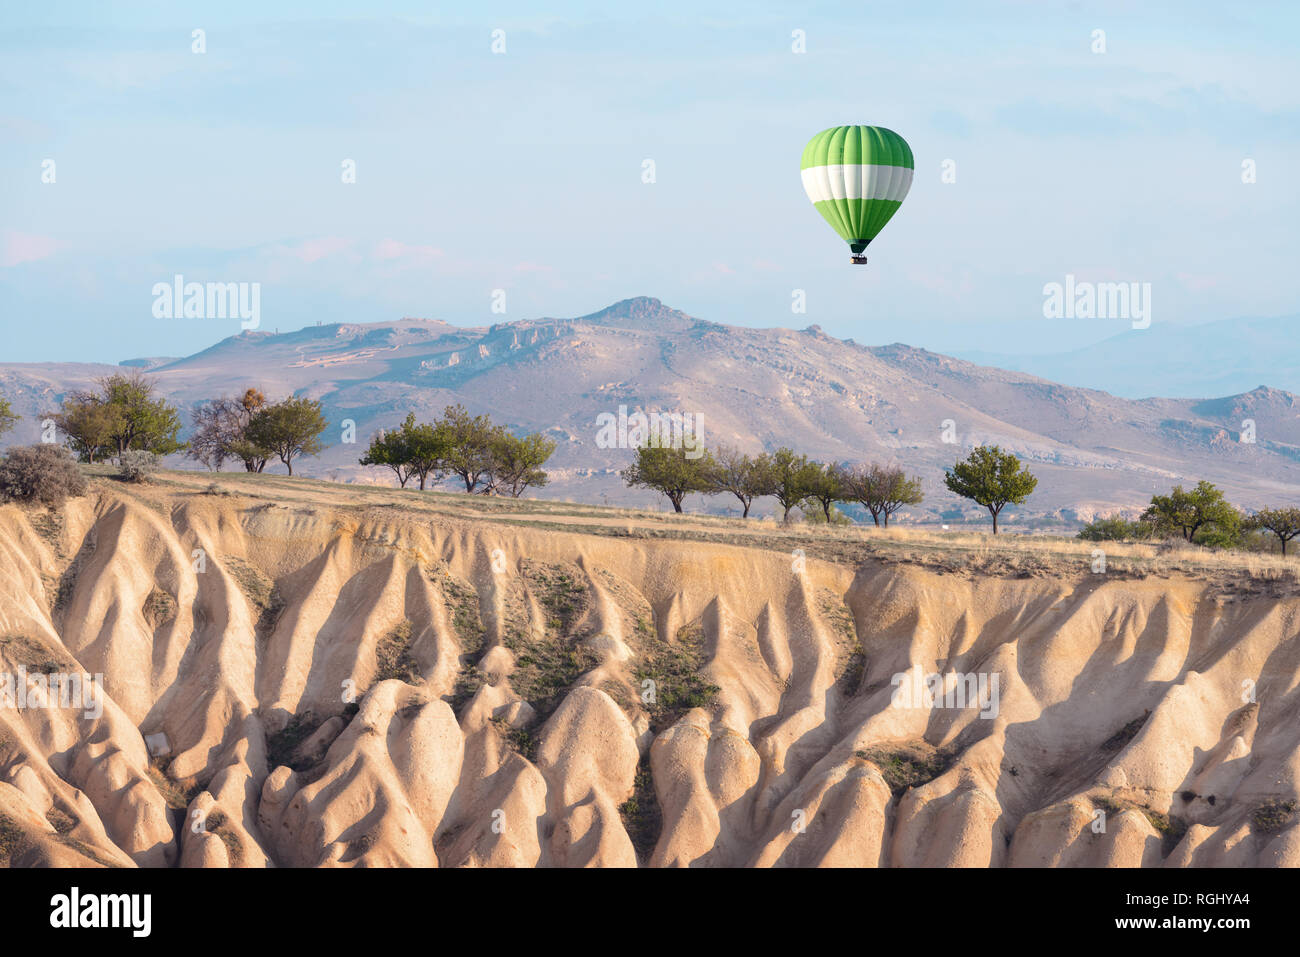 Green balloon in the sunrise sky. Cappadocia, Turkey. Landscape photography Stock Photo